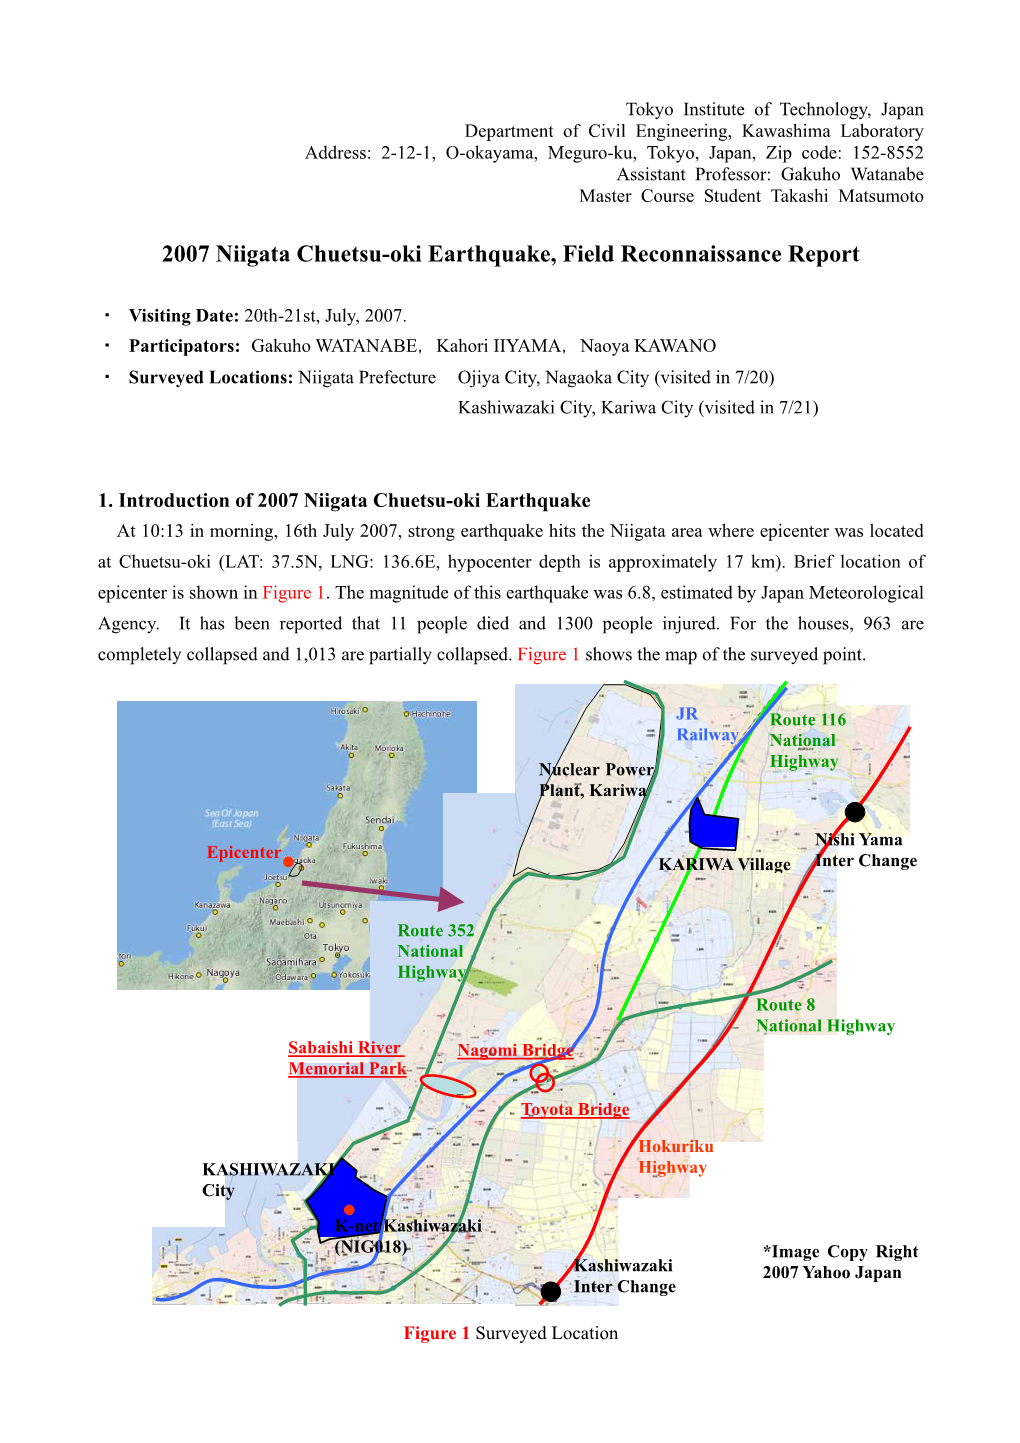 2007 Niigata Chuetsu-Oki Earthquake, Field Reconnaissance Report